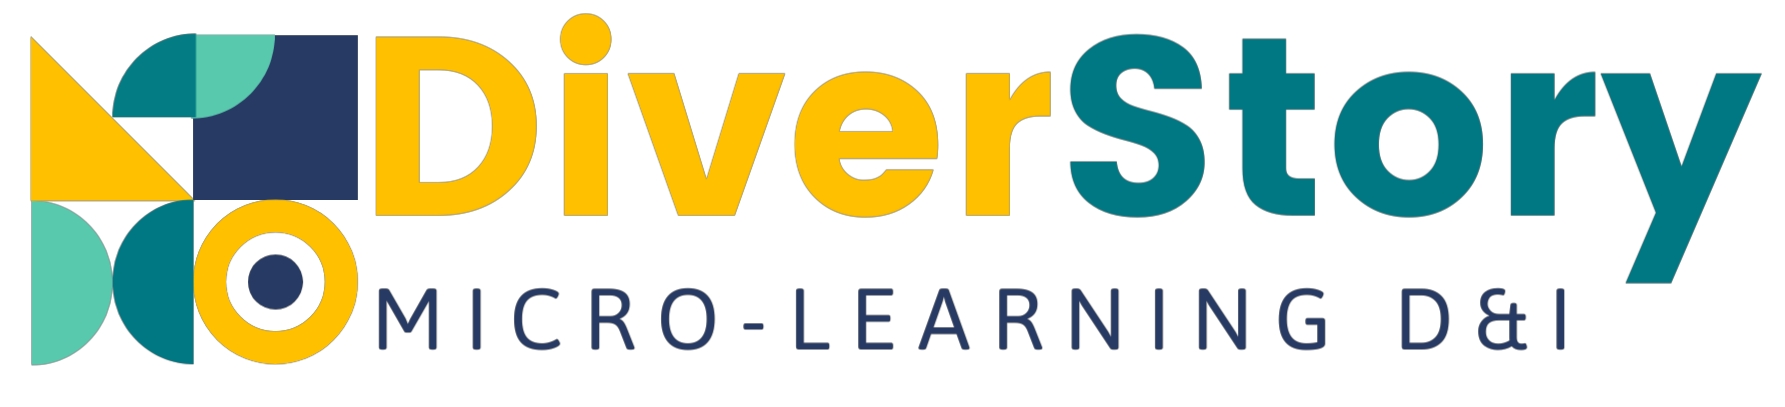 Logo Diverstory plateforme de micro-learning D&I